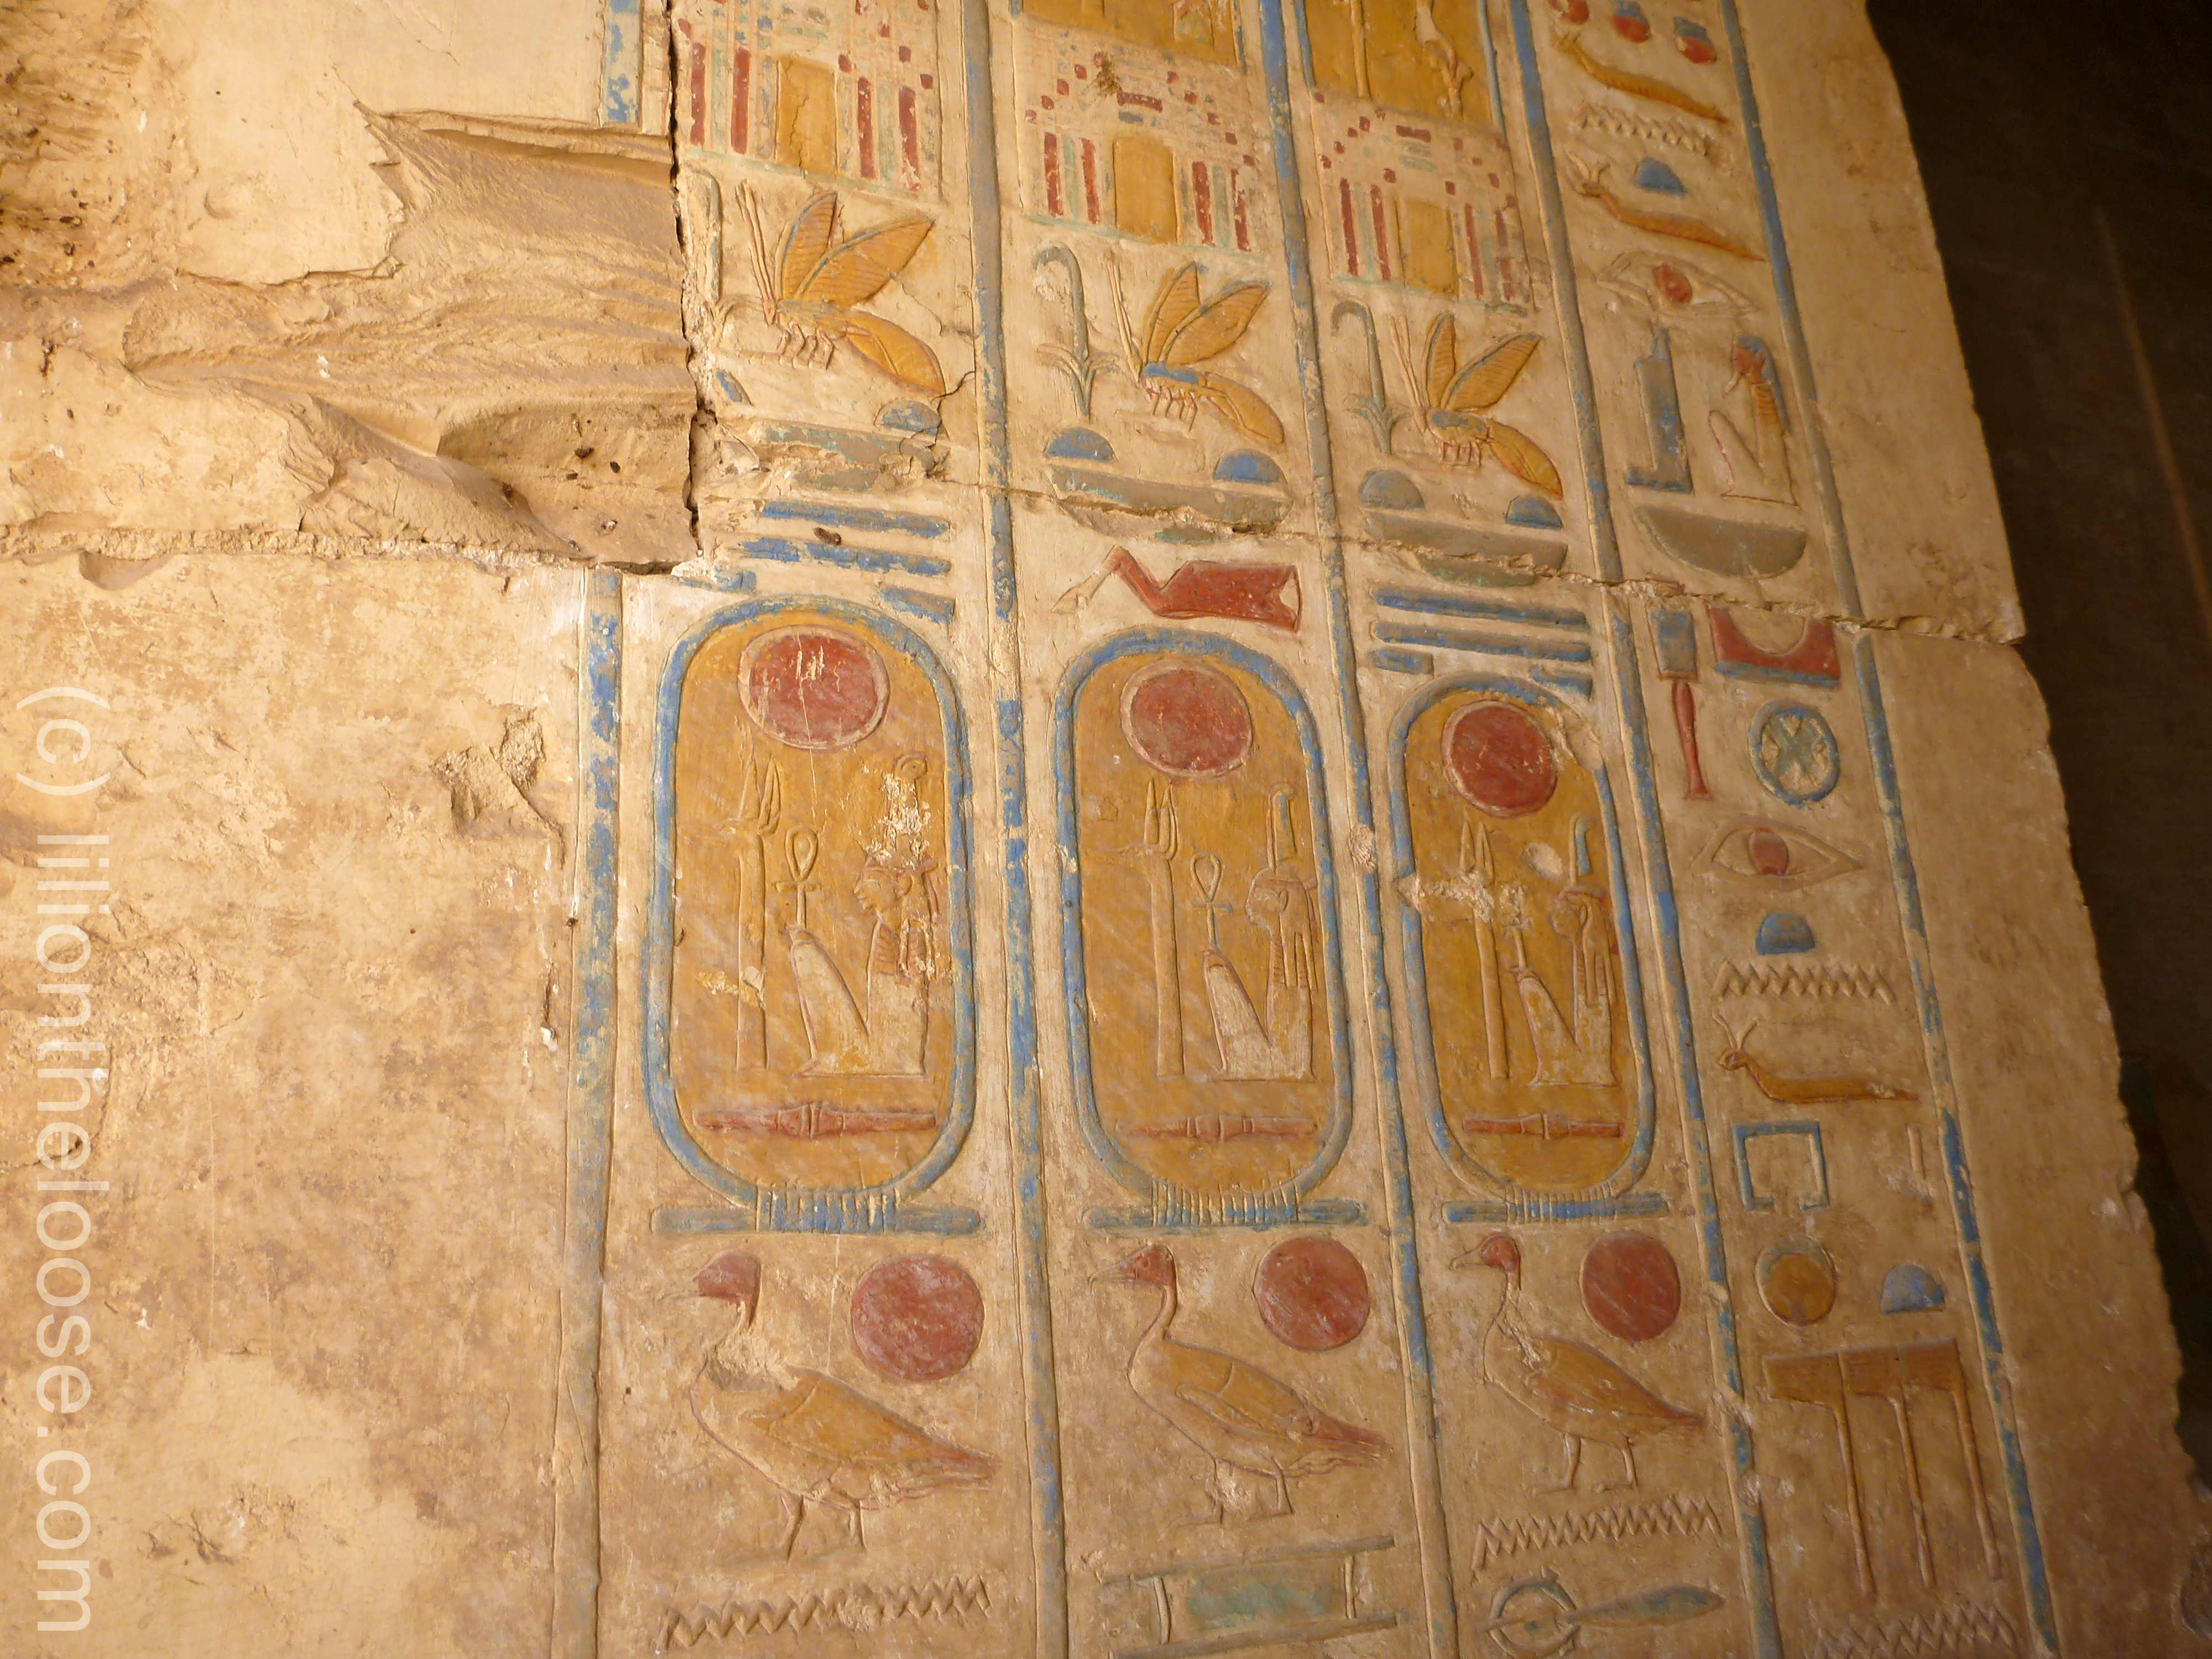 hieroglyphicscolor